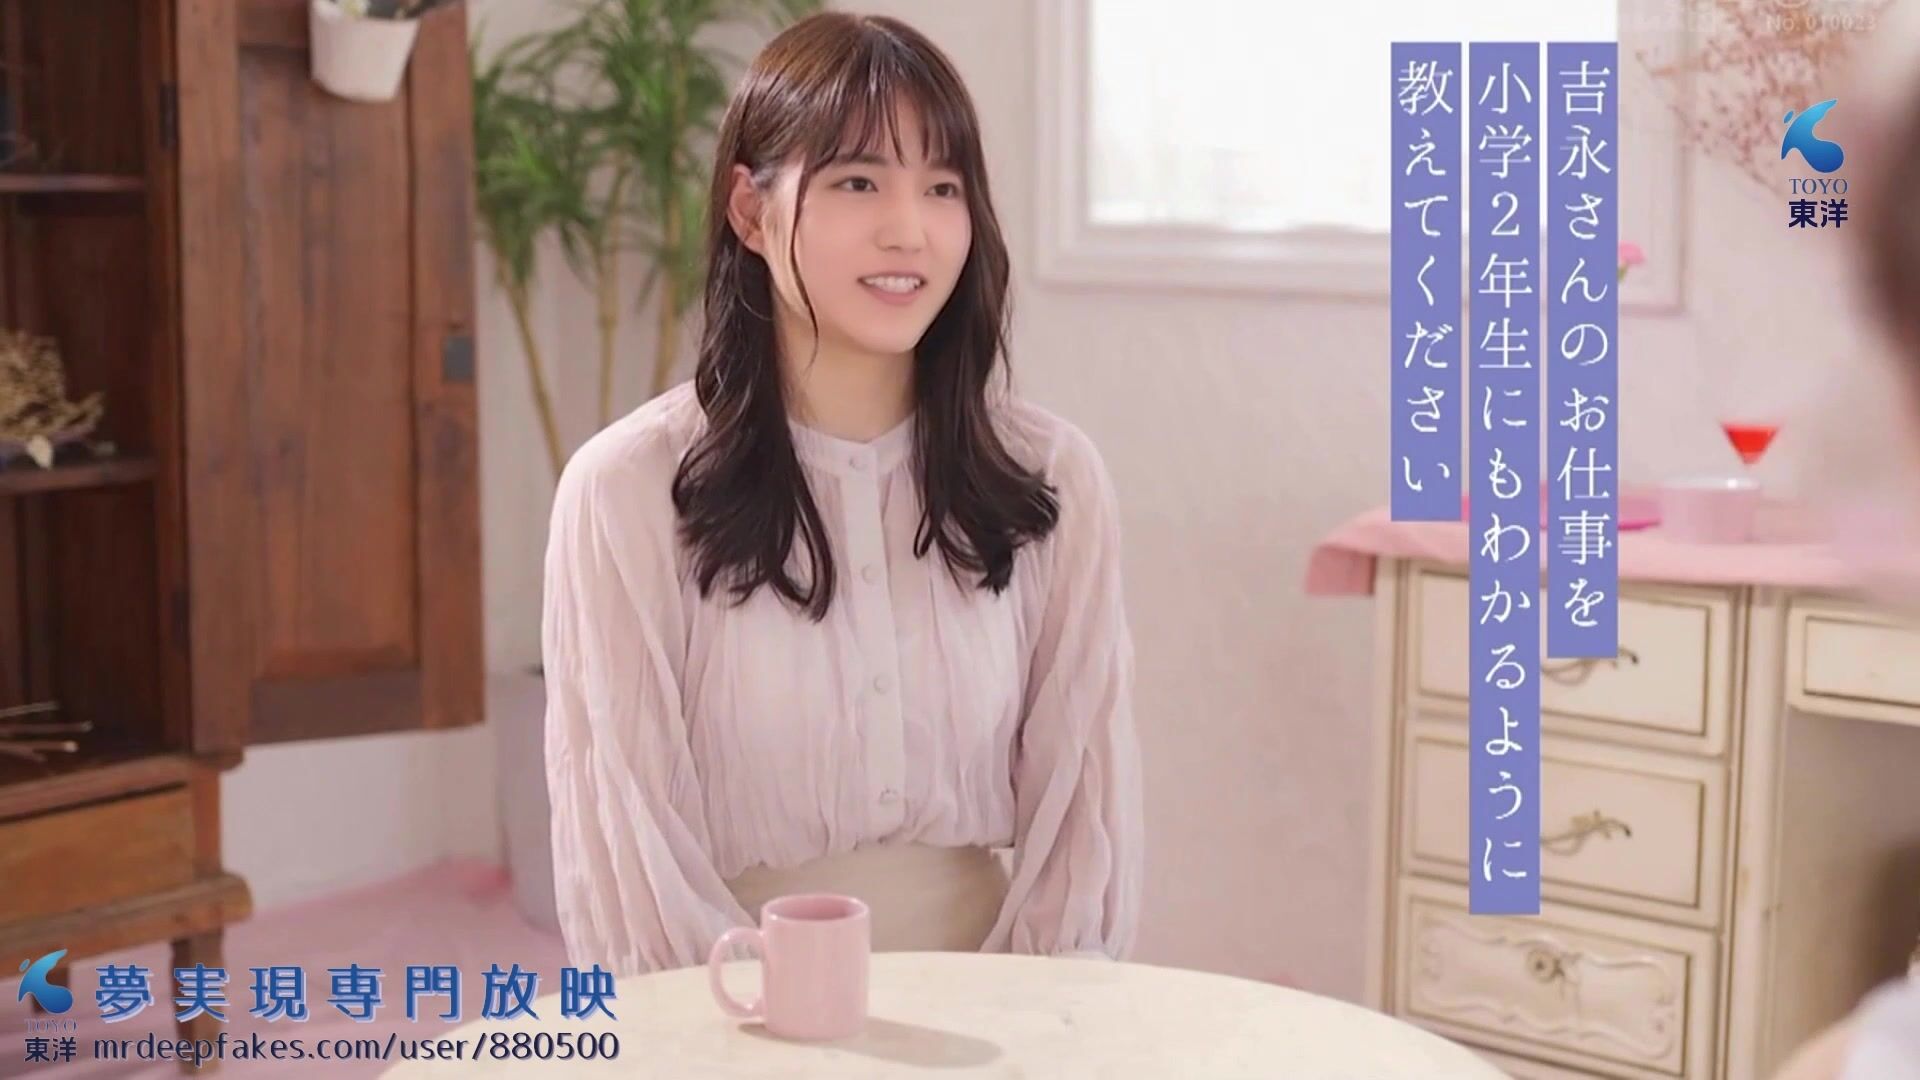 (Deepfake)川口春奈、大人役Haruna Kawaguchi interviews for adult roles 19:50